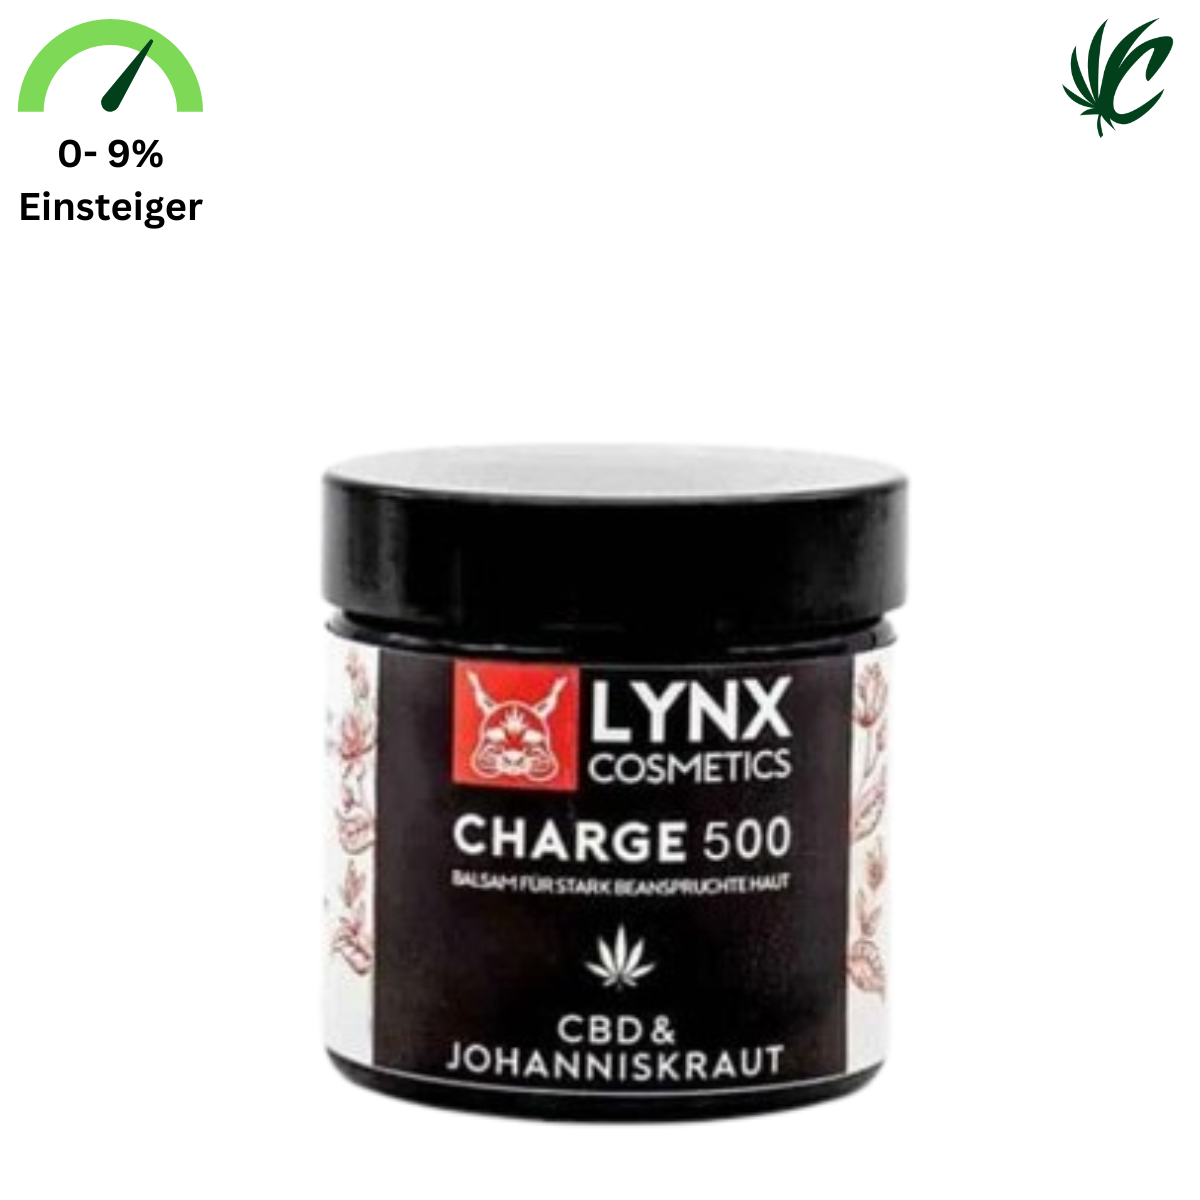 LYNX CBD Balsam Johanniskraut Charge 2,5% / 5% CBD  25g